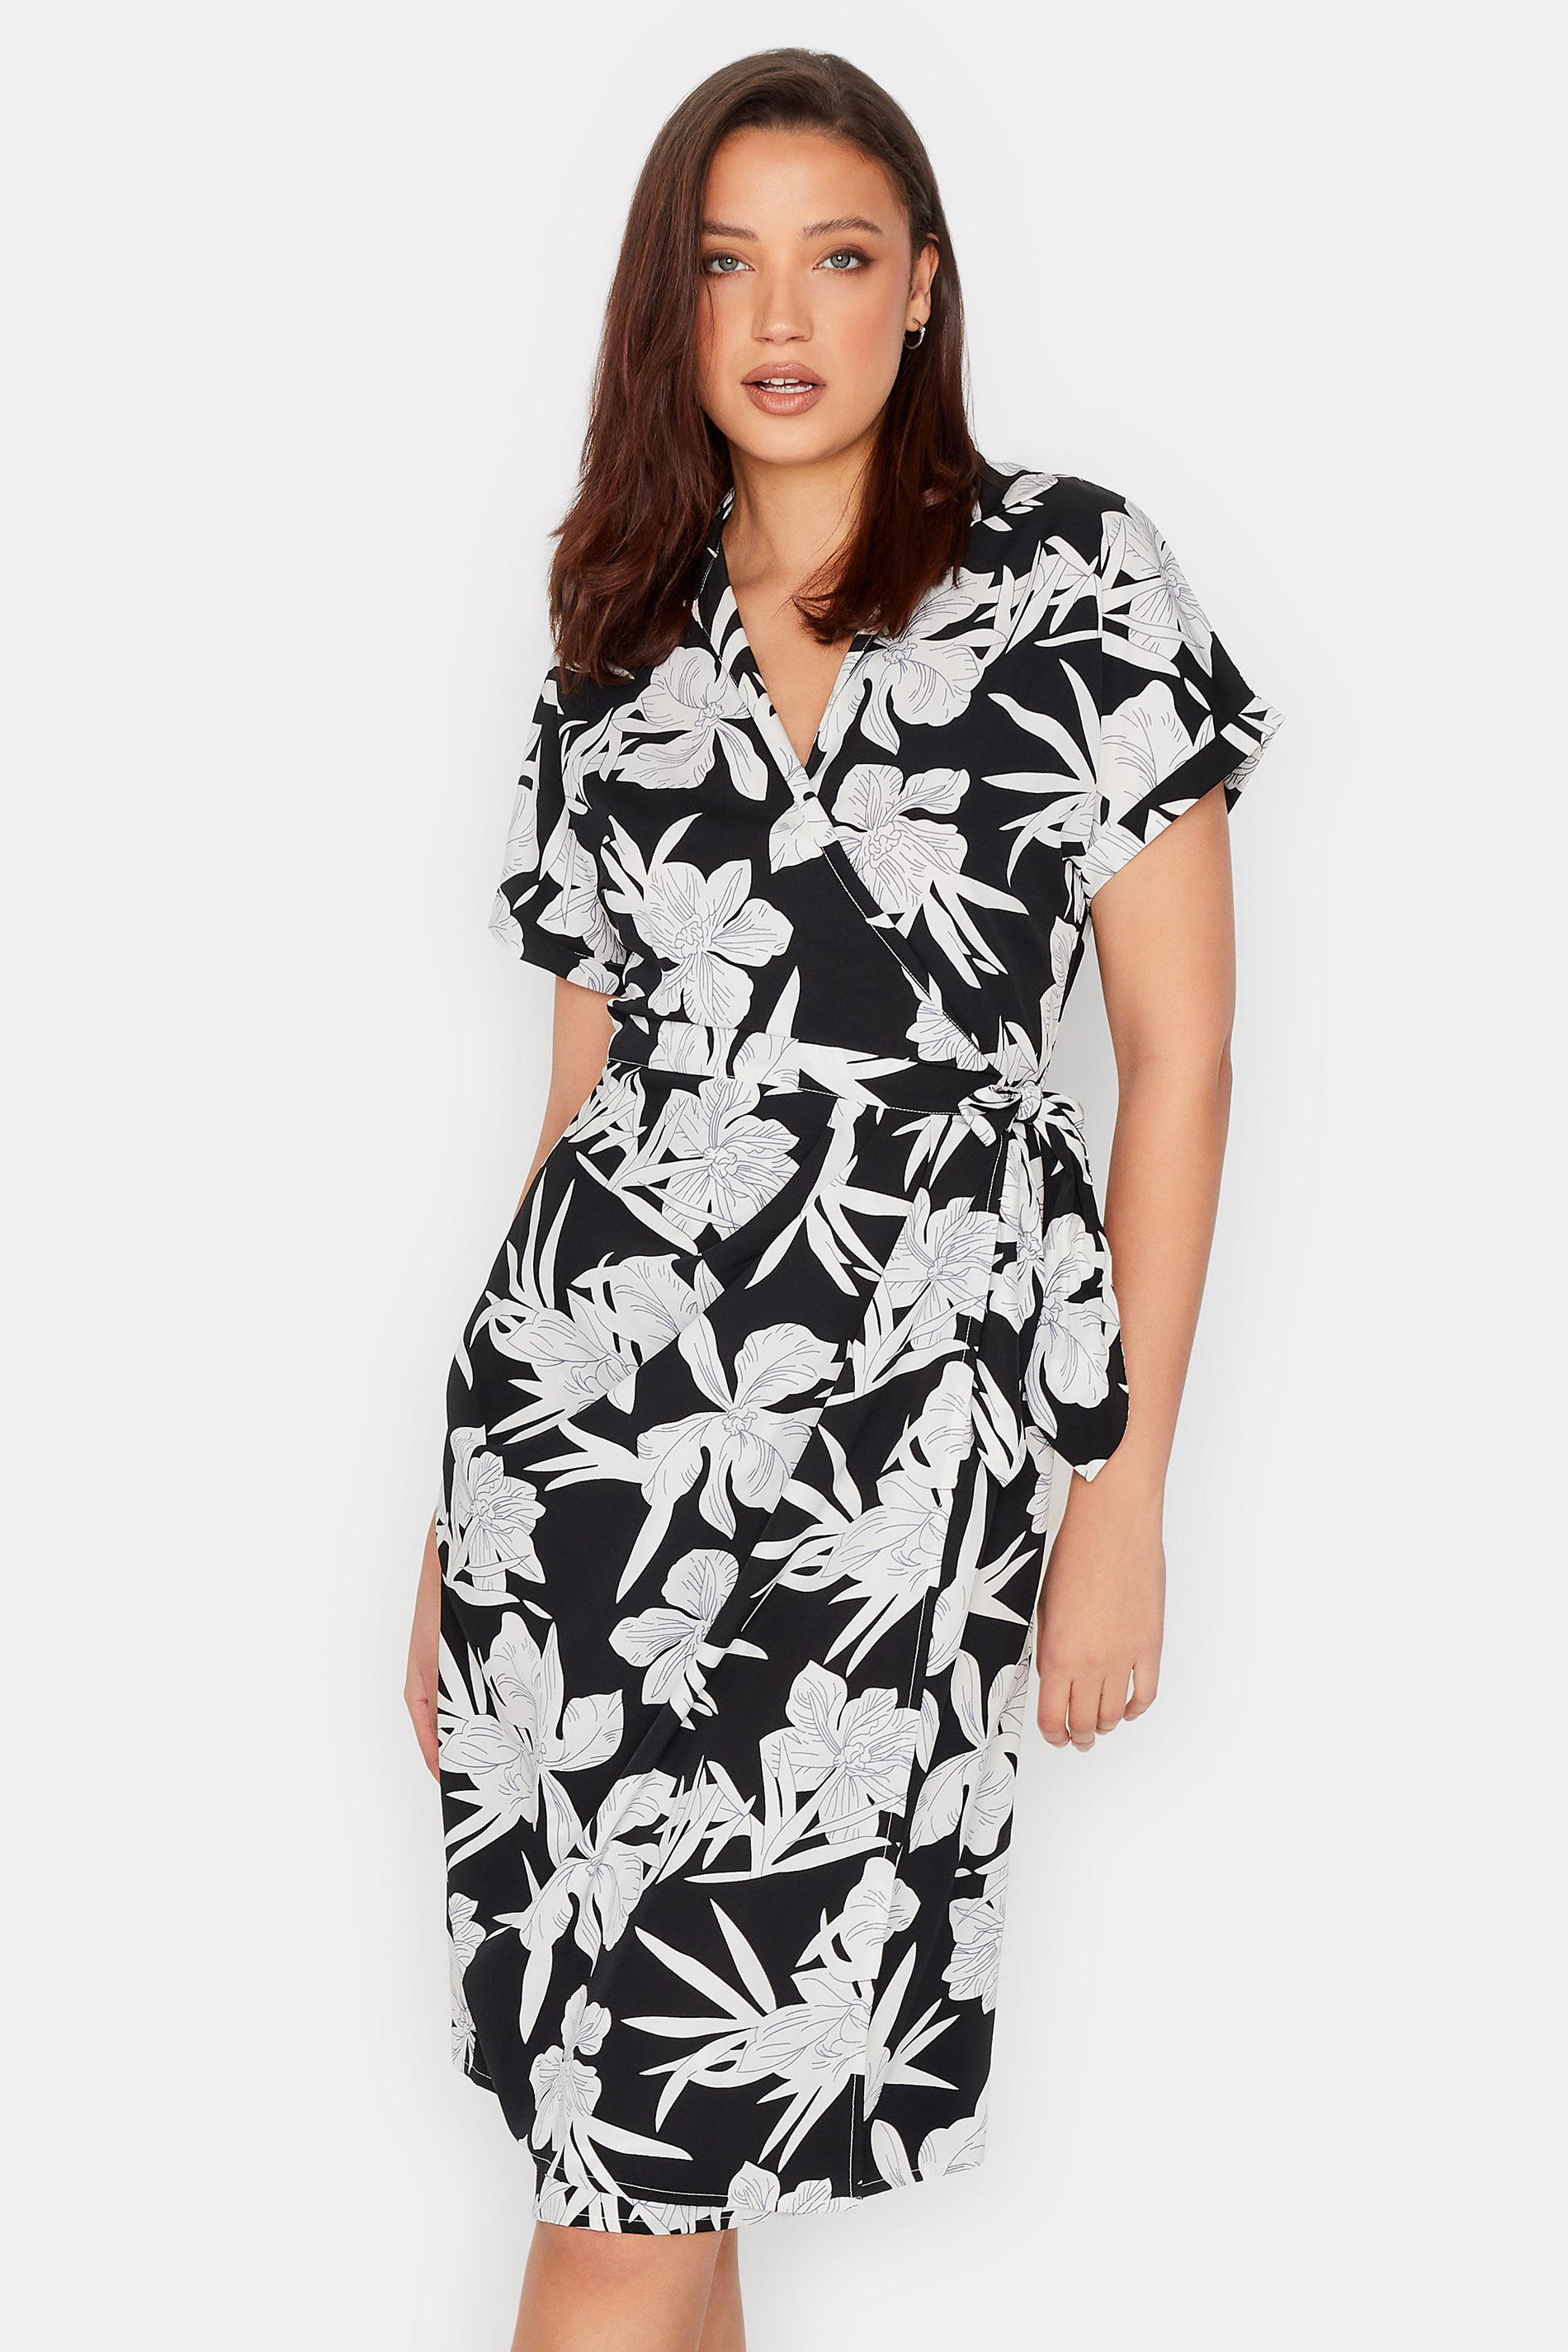 LTS Tall Women's Black Floral Print Shirt Wrap Dress | Long Tall Sally 1